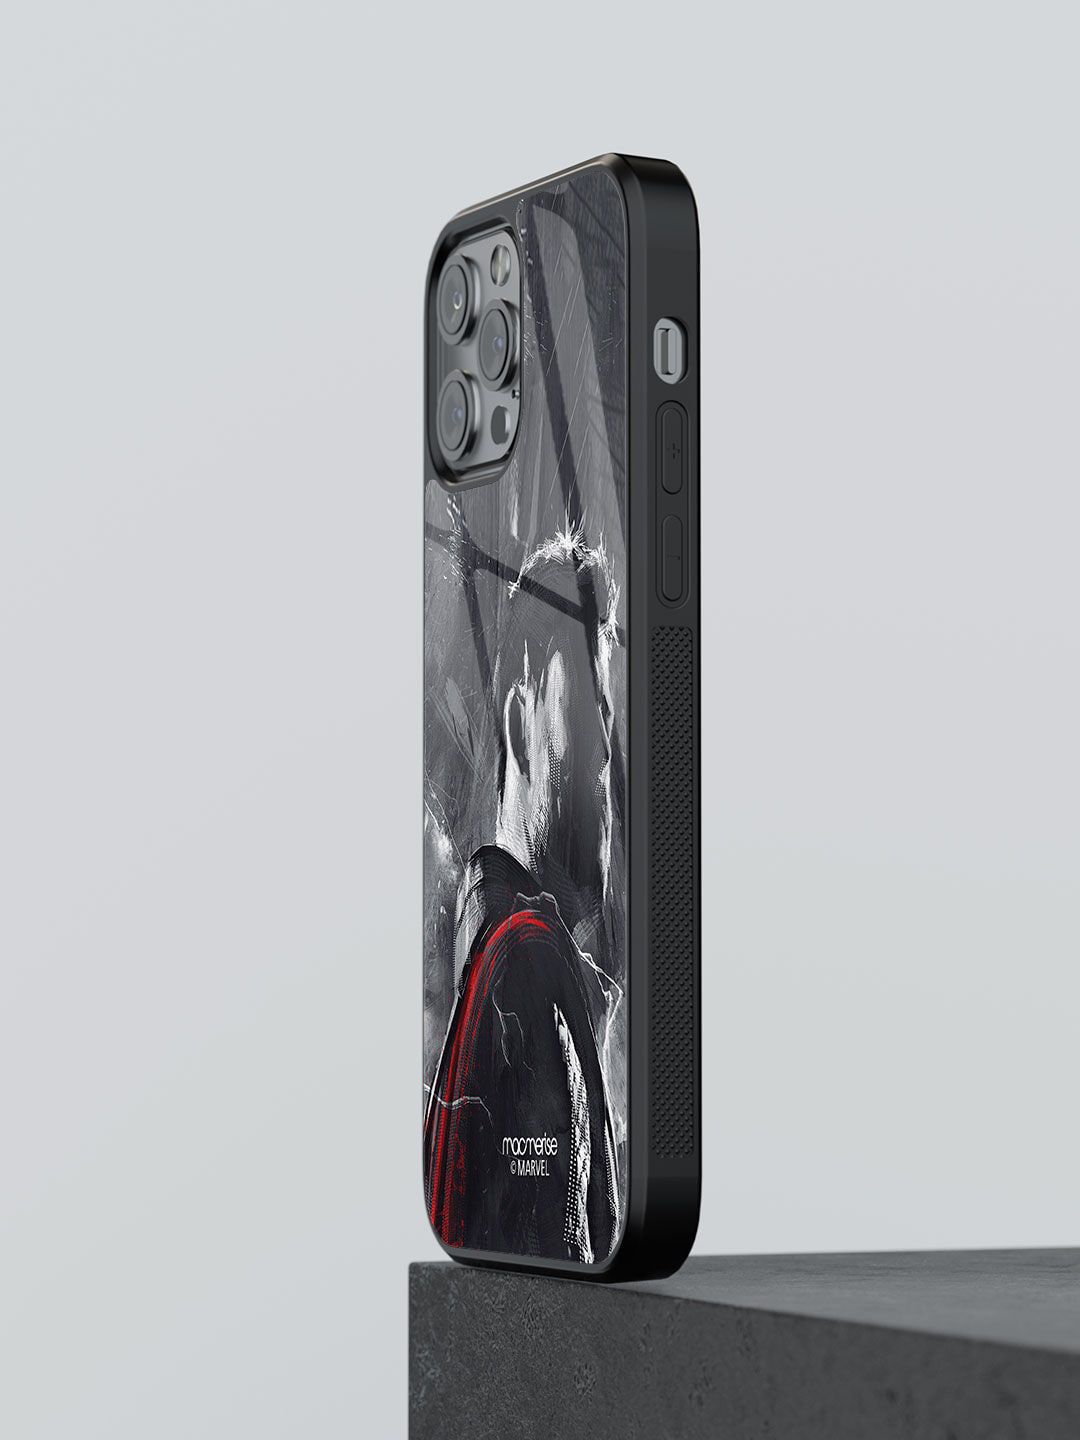 macmerise Grey Printed Iphone 13 Pro Max Back Case Price in India